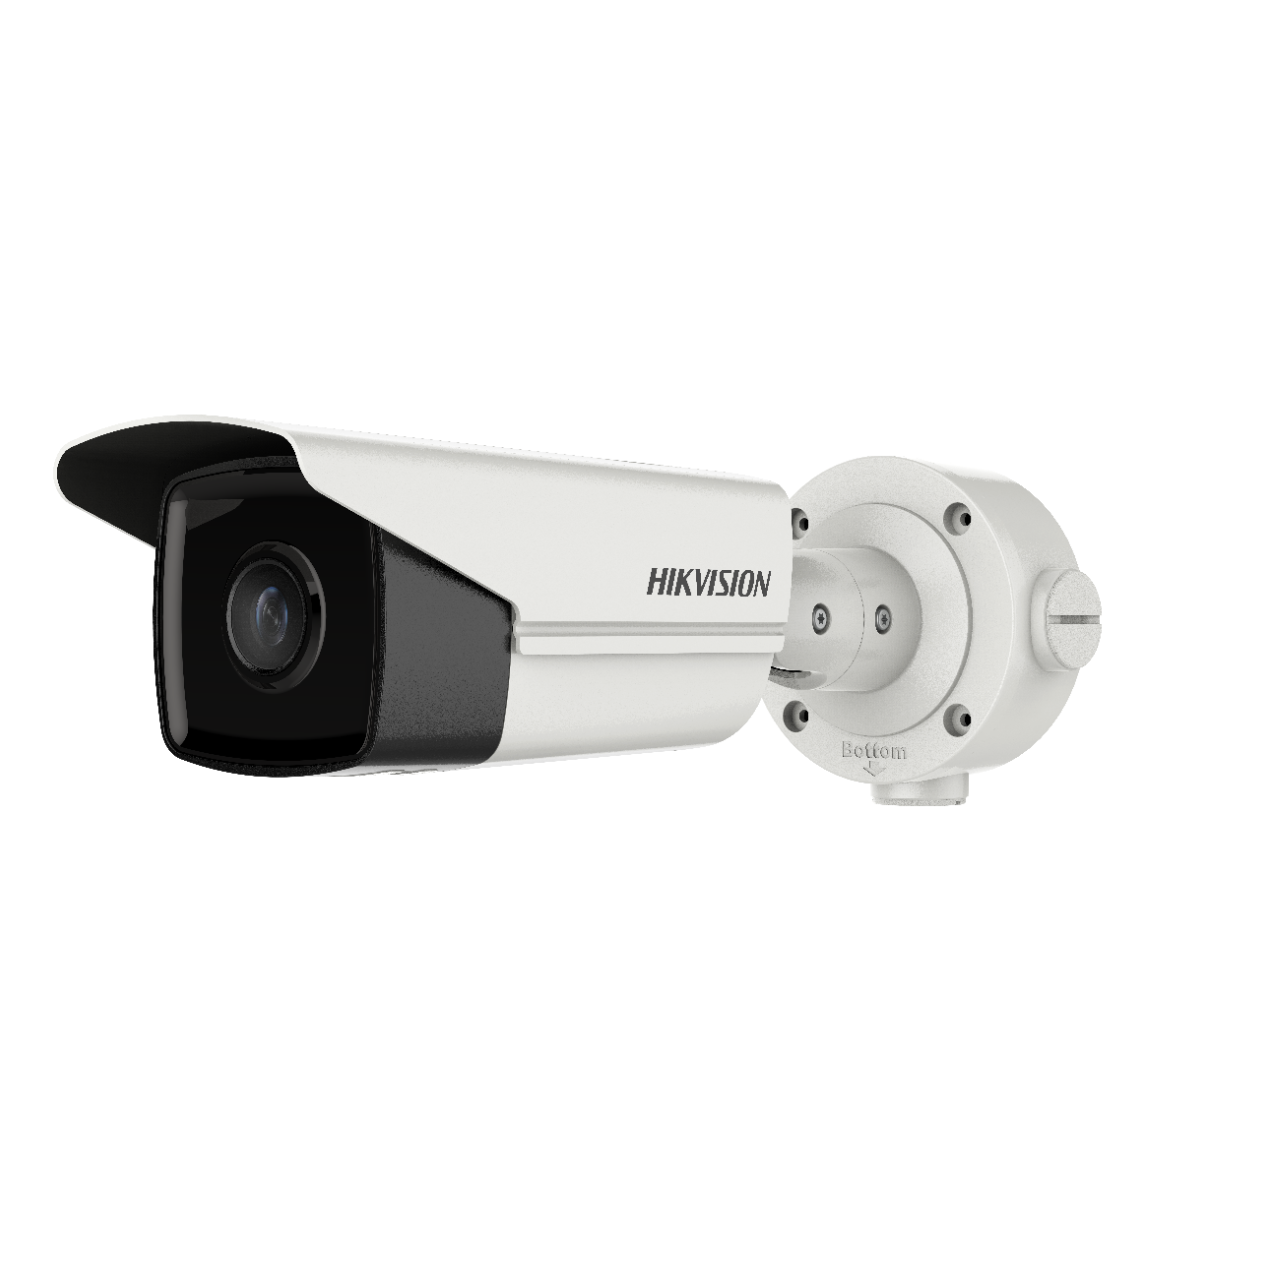 Hikvision DS-2CD3T43G2-4IS(2.8mm) 4MP Full HD WDR EXIR IP Bullet Kamera mit Alarm- und Audioanschlus